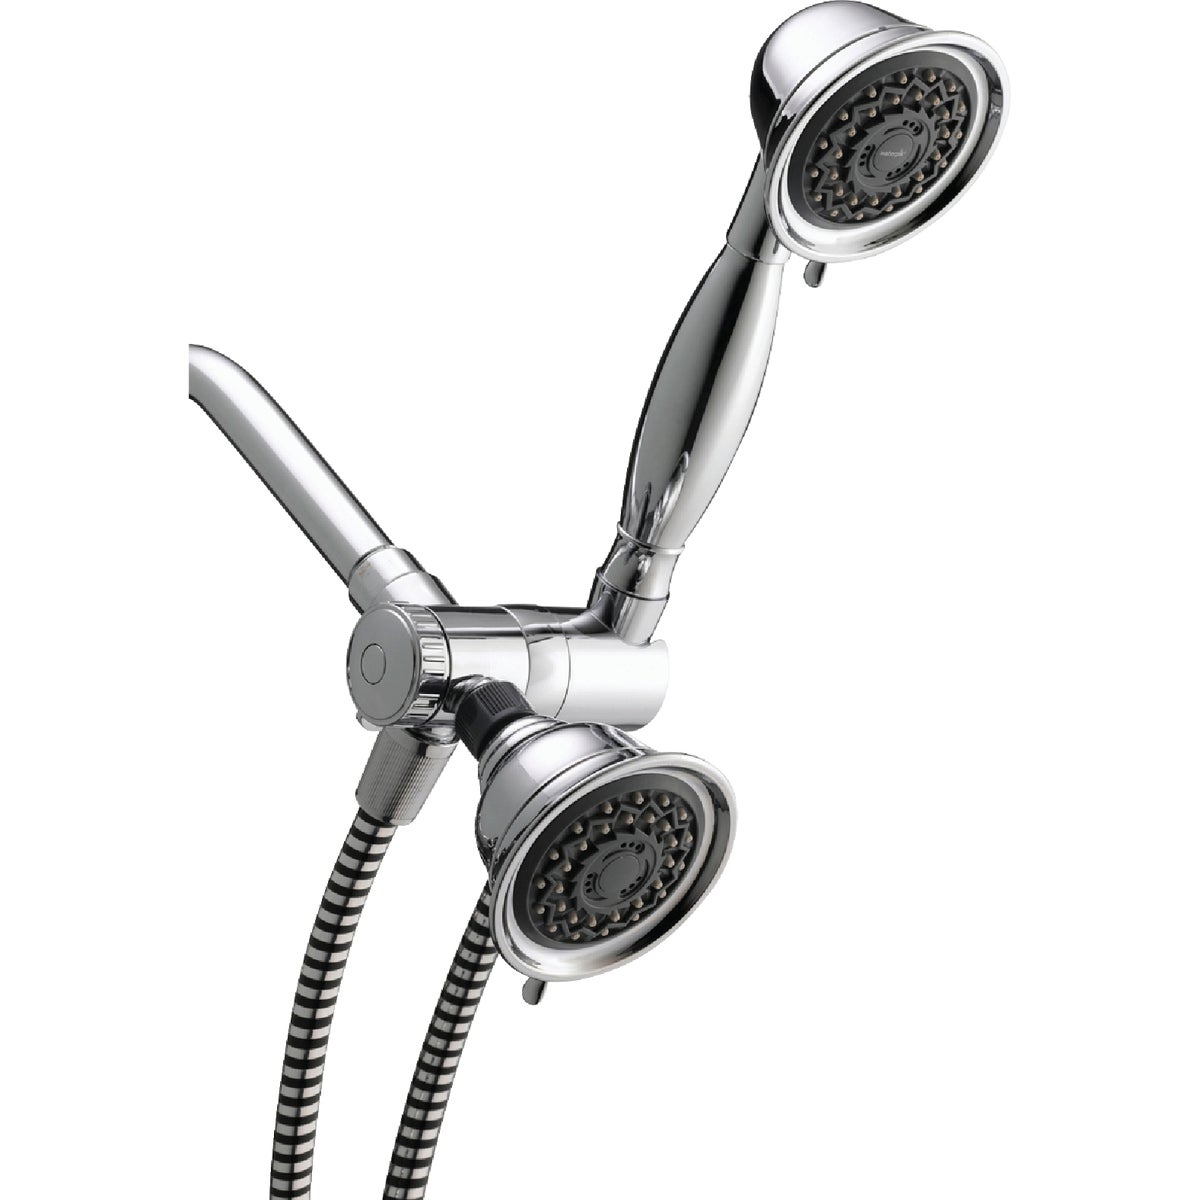 Item 403571, This Waterpik PowerSpray+ shower head combines premium design and 